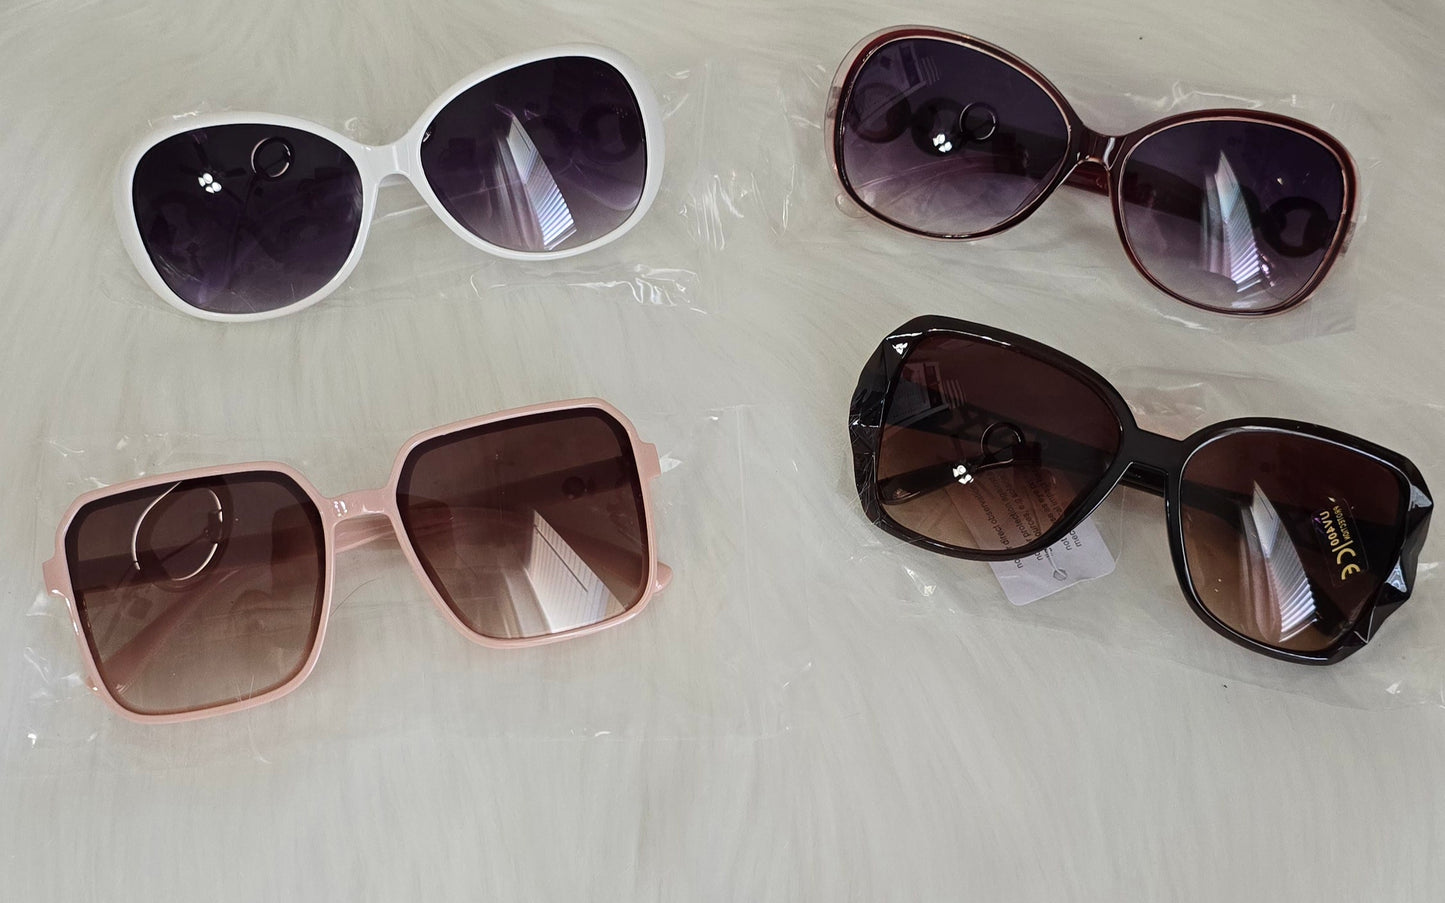 Mystery Sunglasses (Sunnies) Scoop!